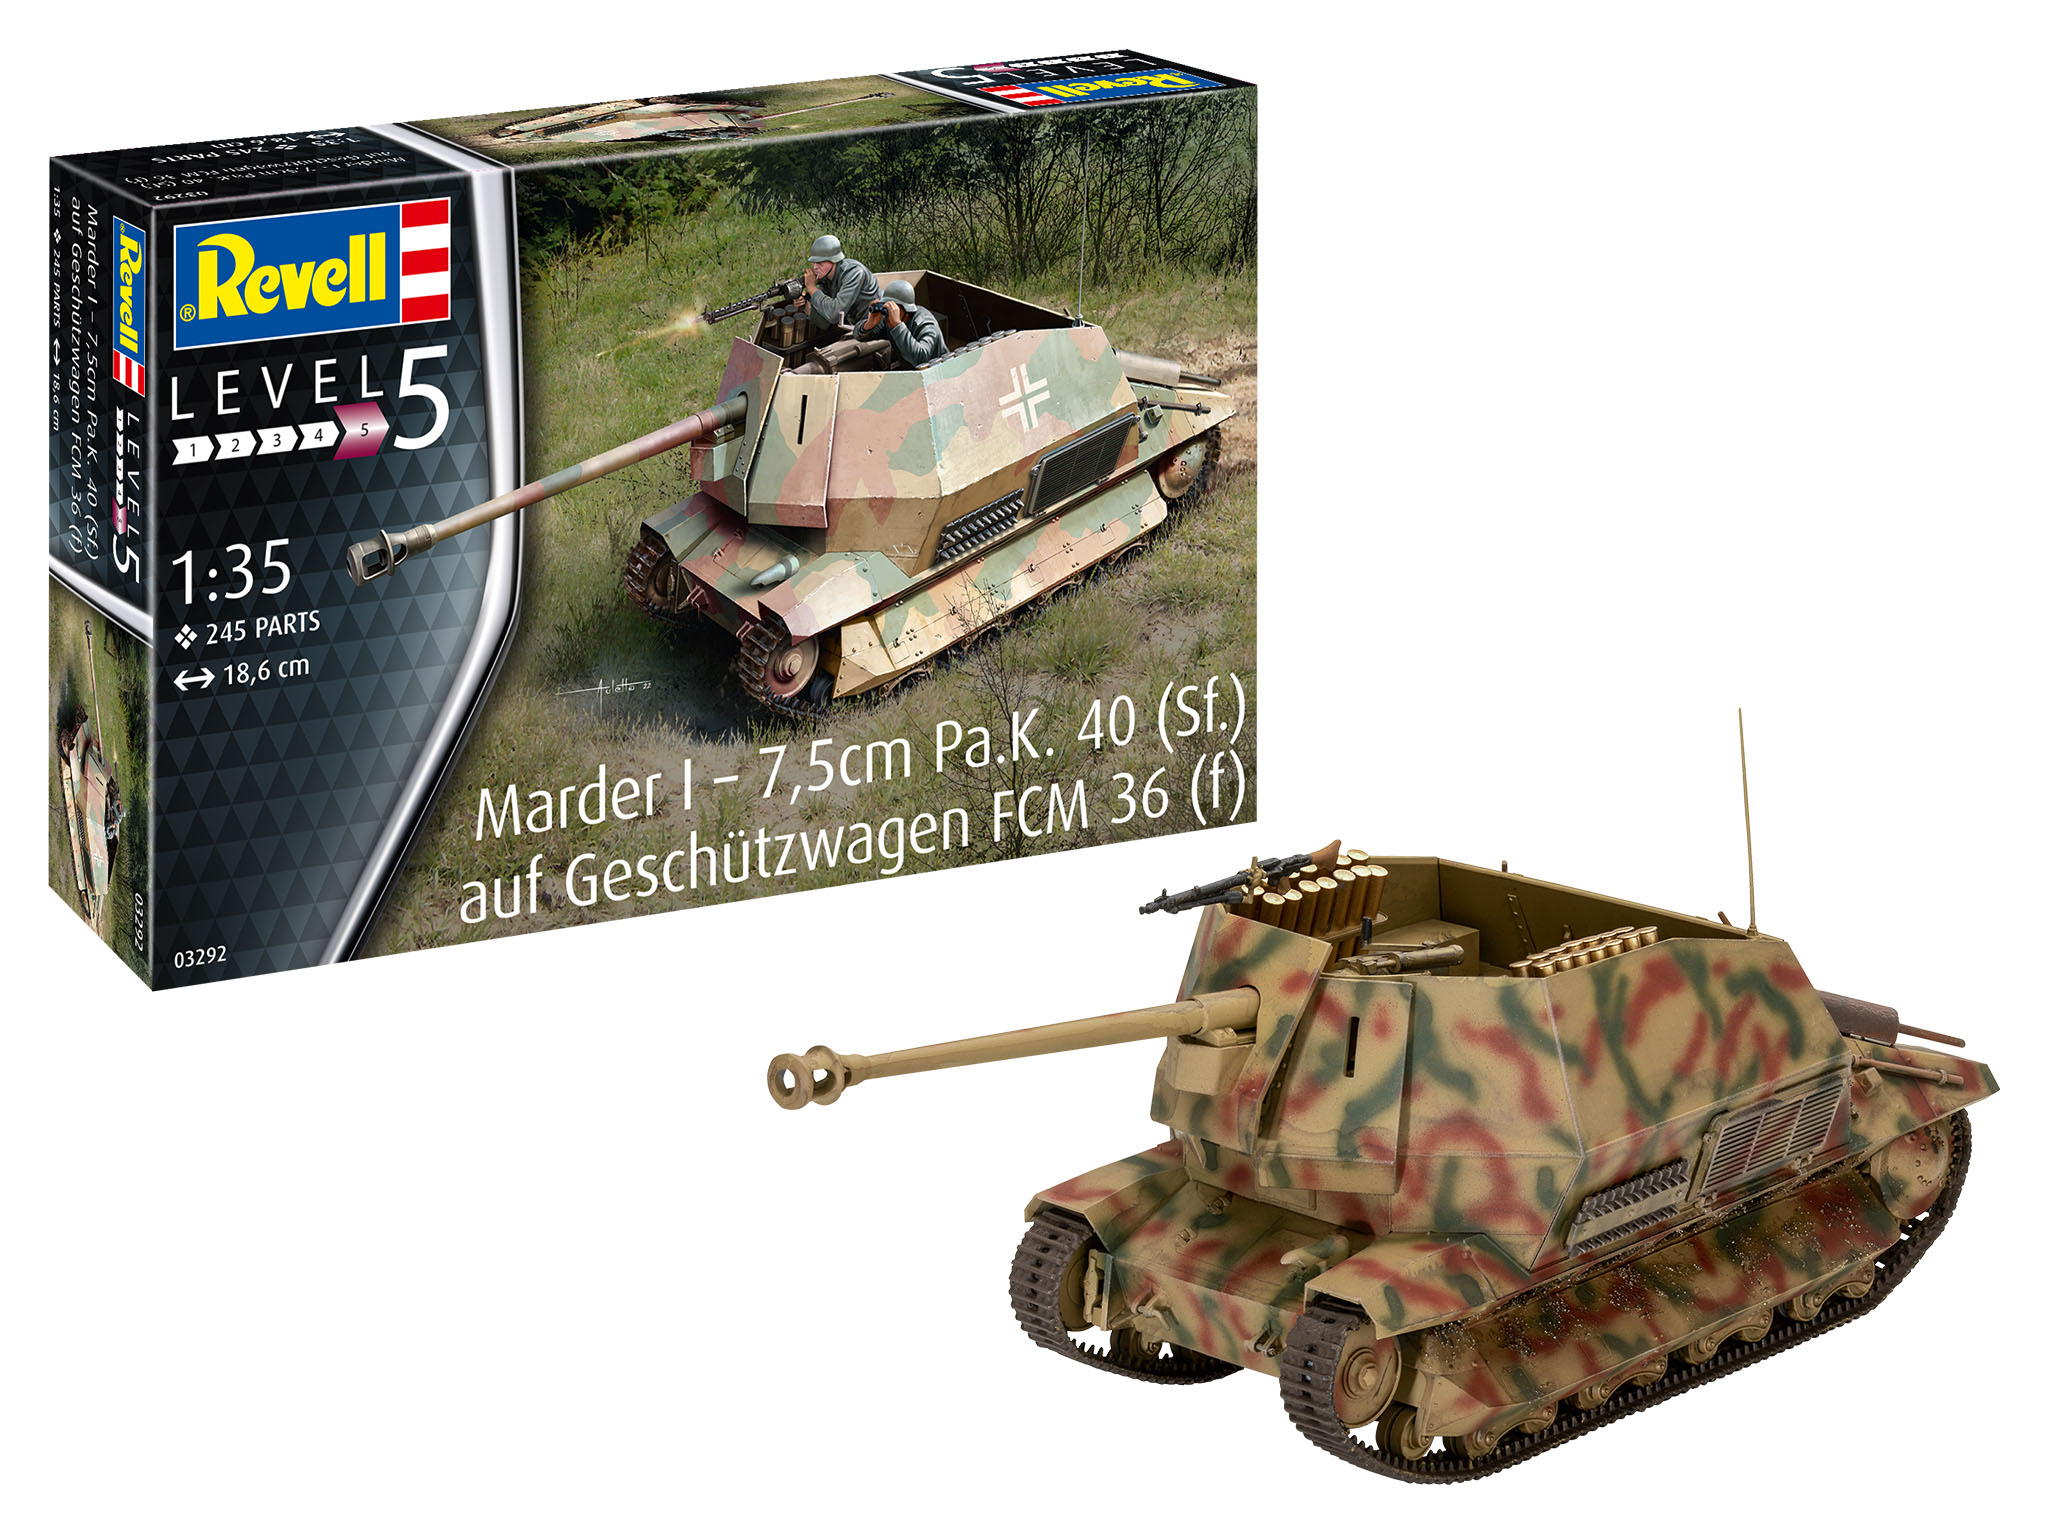 revell-03292-Marder-I-7-5cm-Pak-40-Sf-auf-Geschützwagen-FCM-36-f